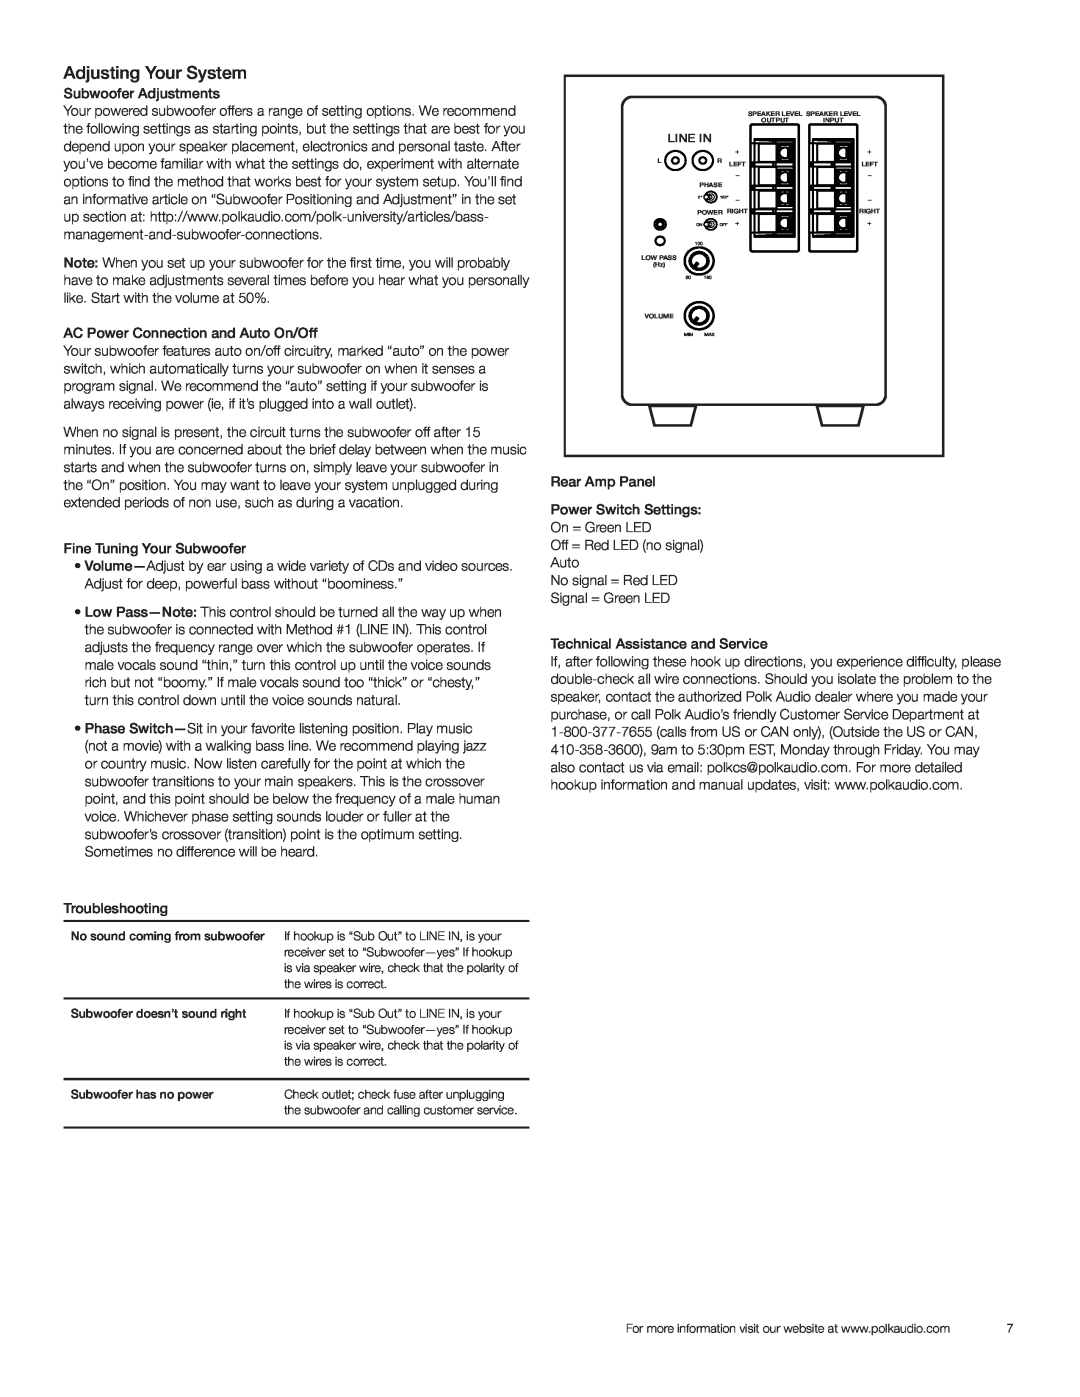 Polk Audio PSW121 owner manual Adjusting Your System 